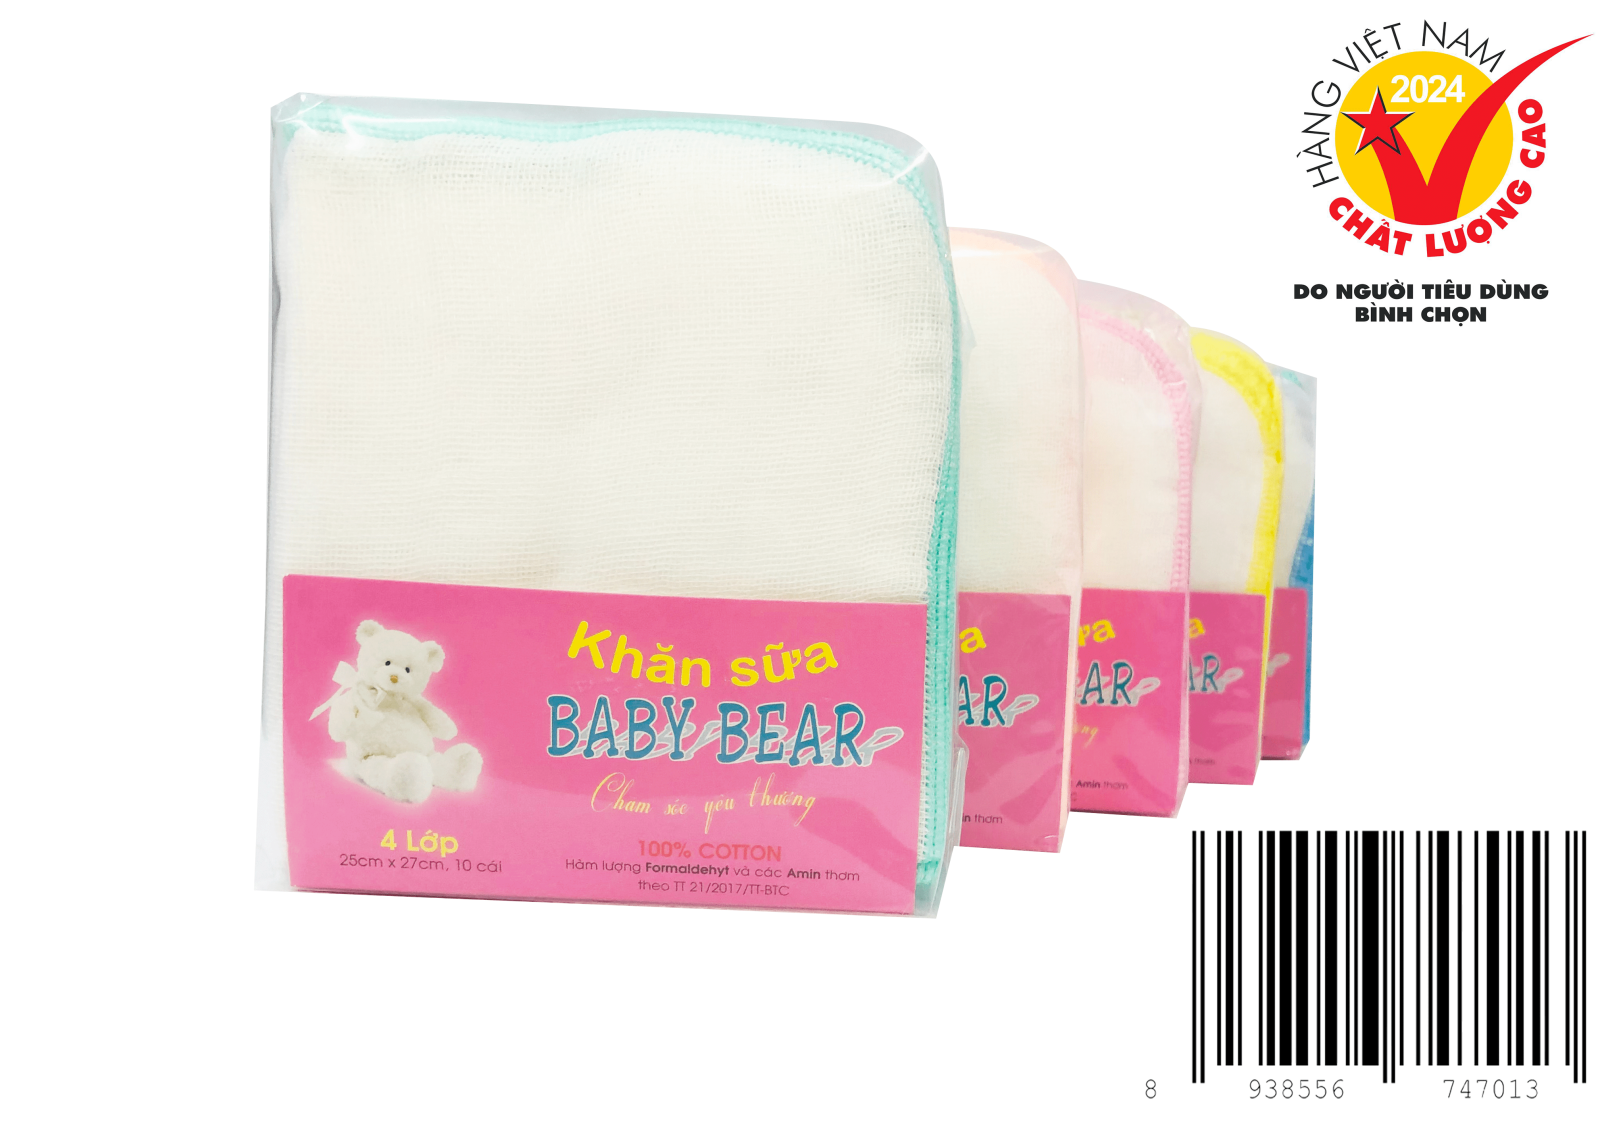 Khăn sữa Baby Bear 4 Lớp 10 cái 25 cm x 27 cm